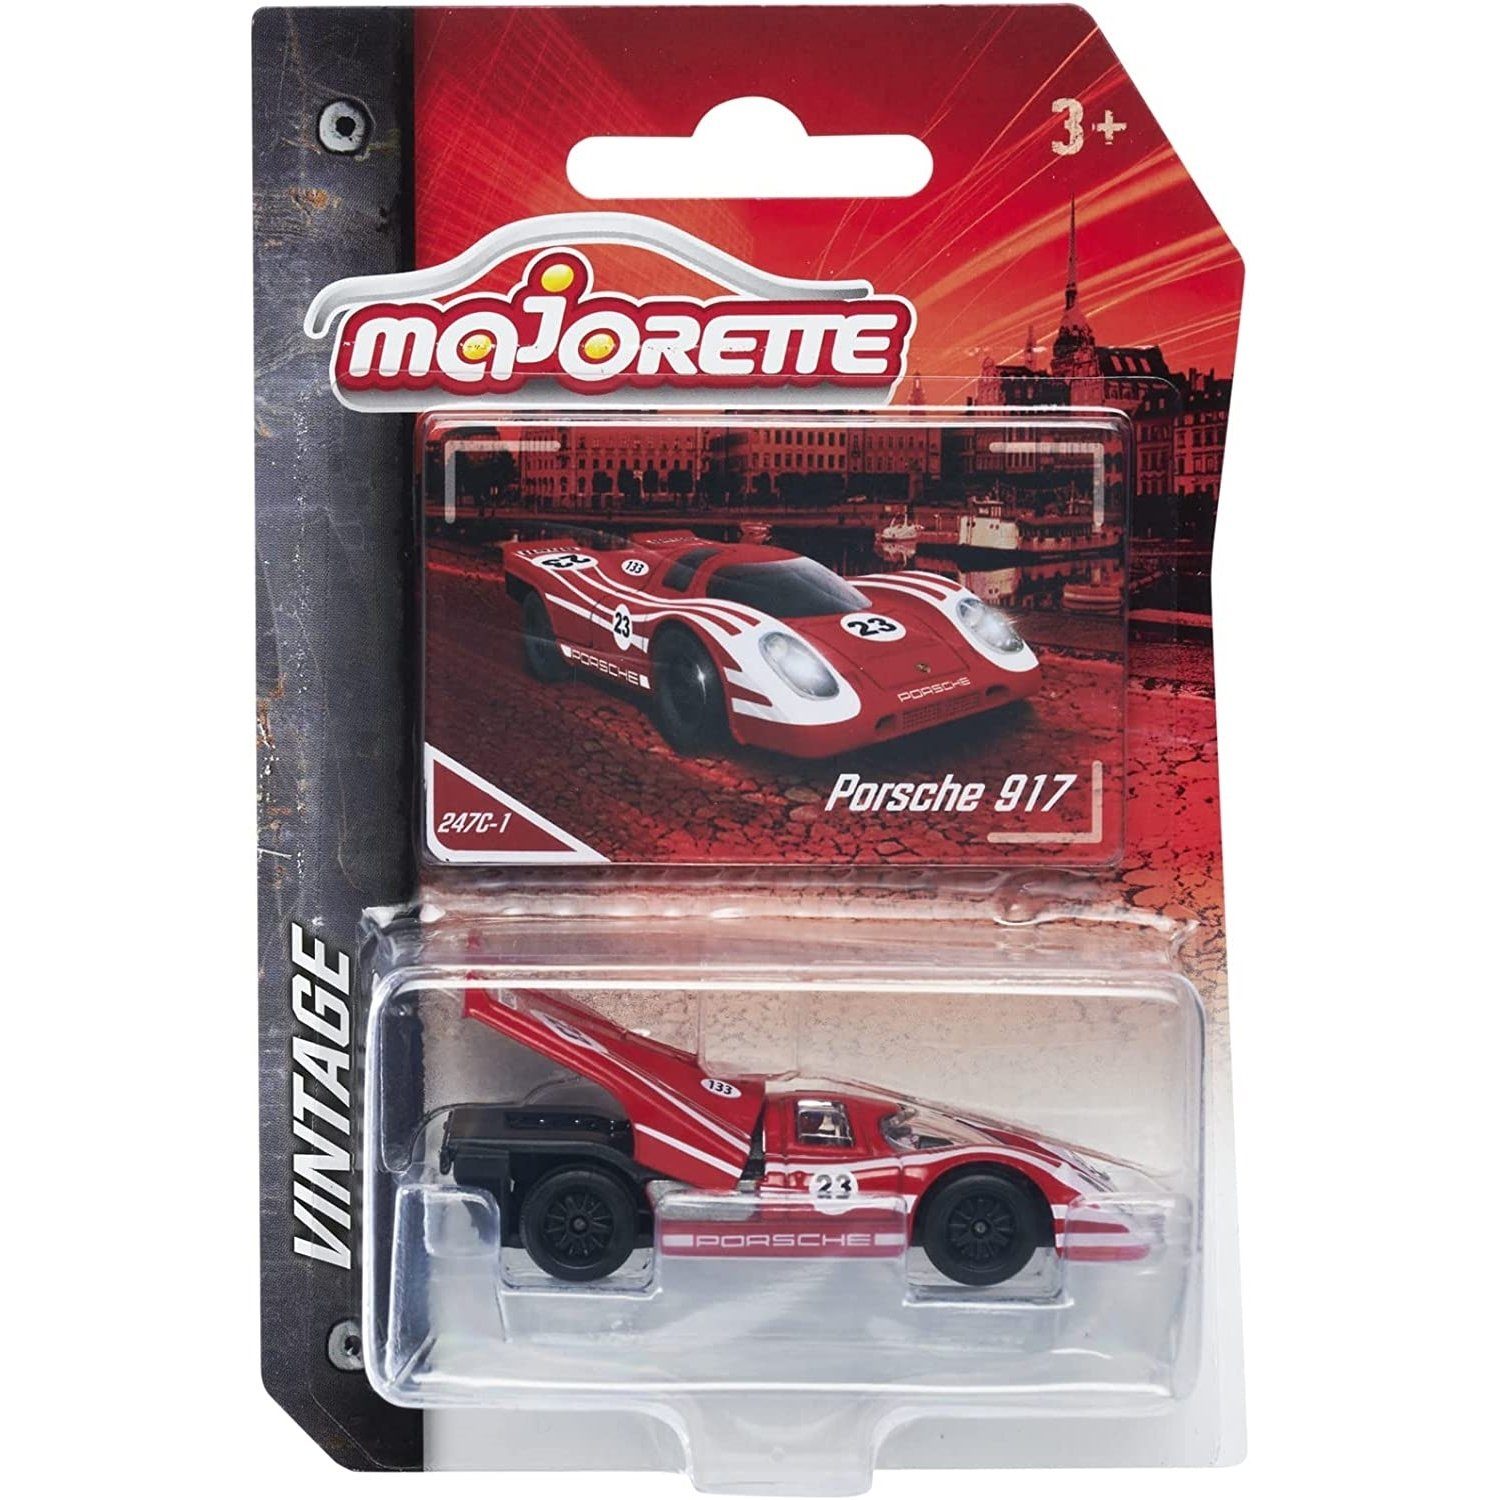 majORETTE Spielzeug-Auto 212052010Q07 Vintage Porsche 917 rot